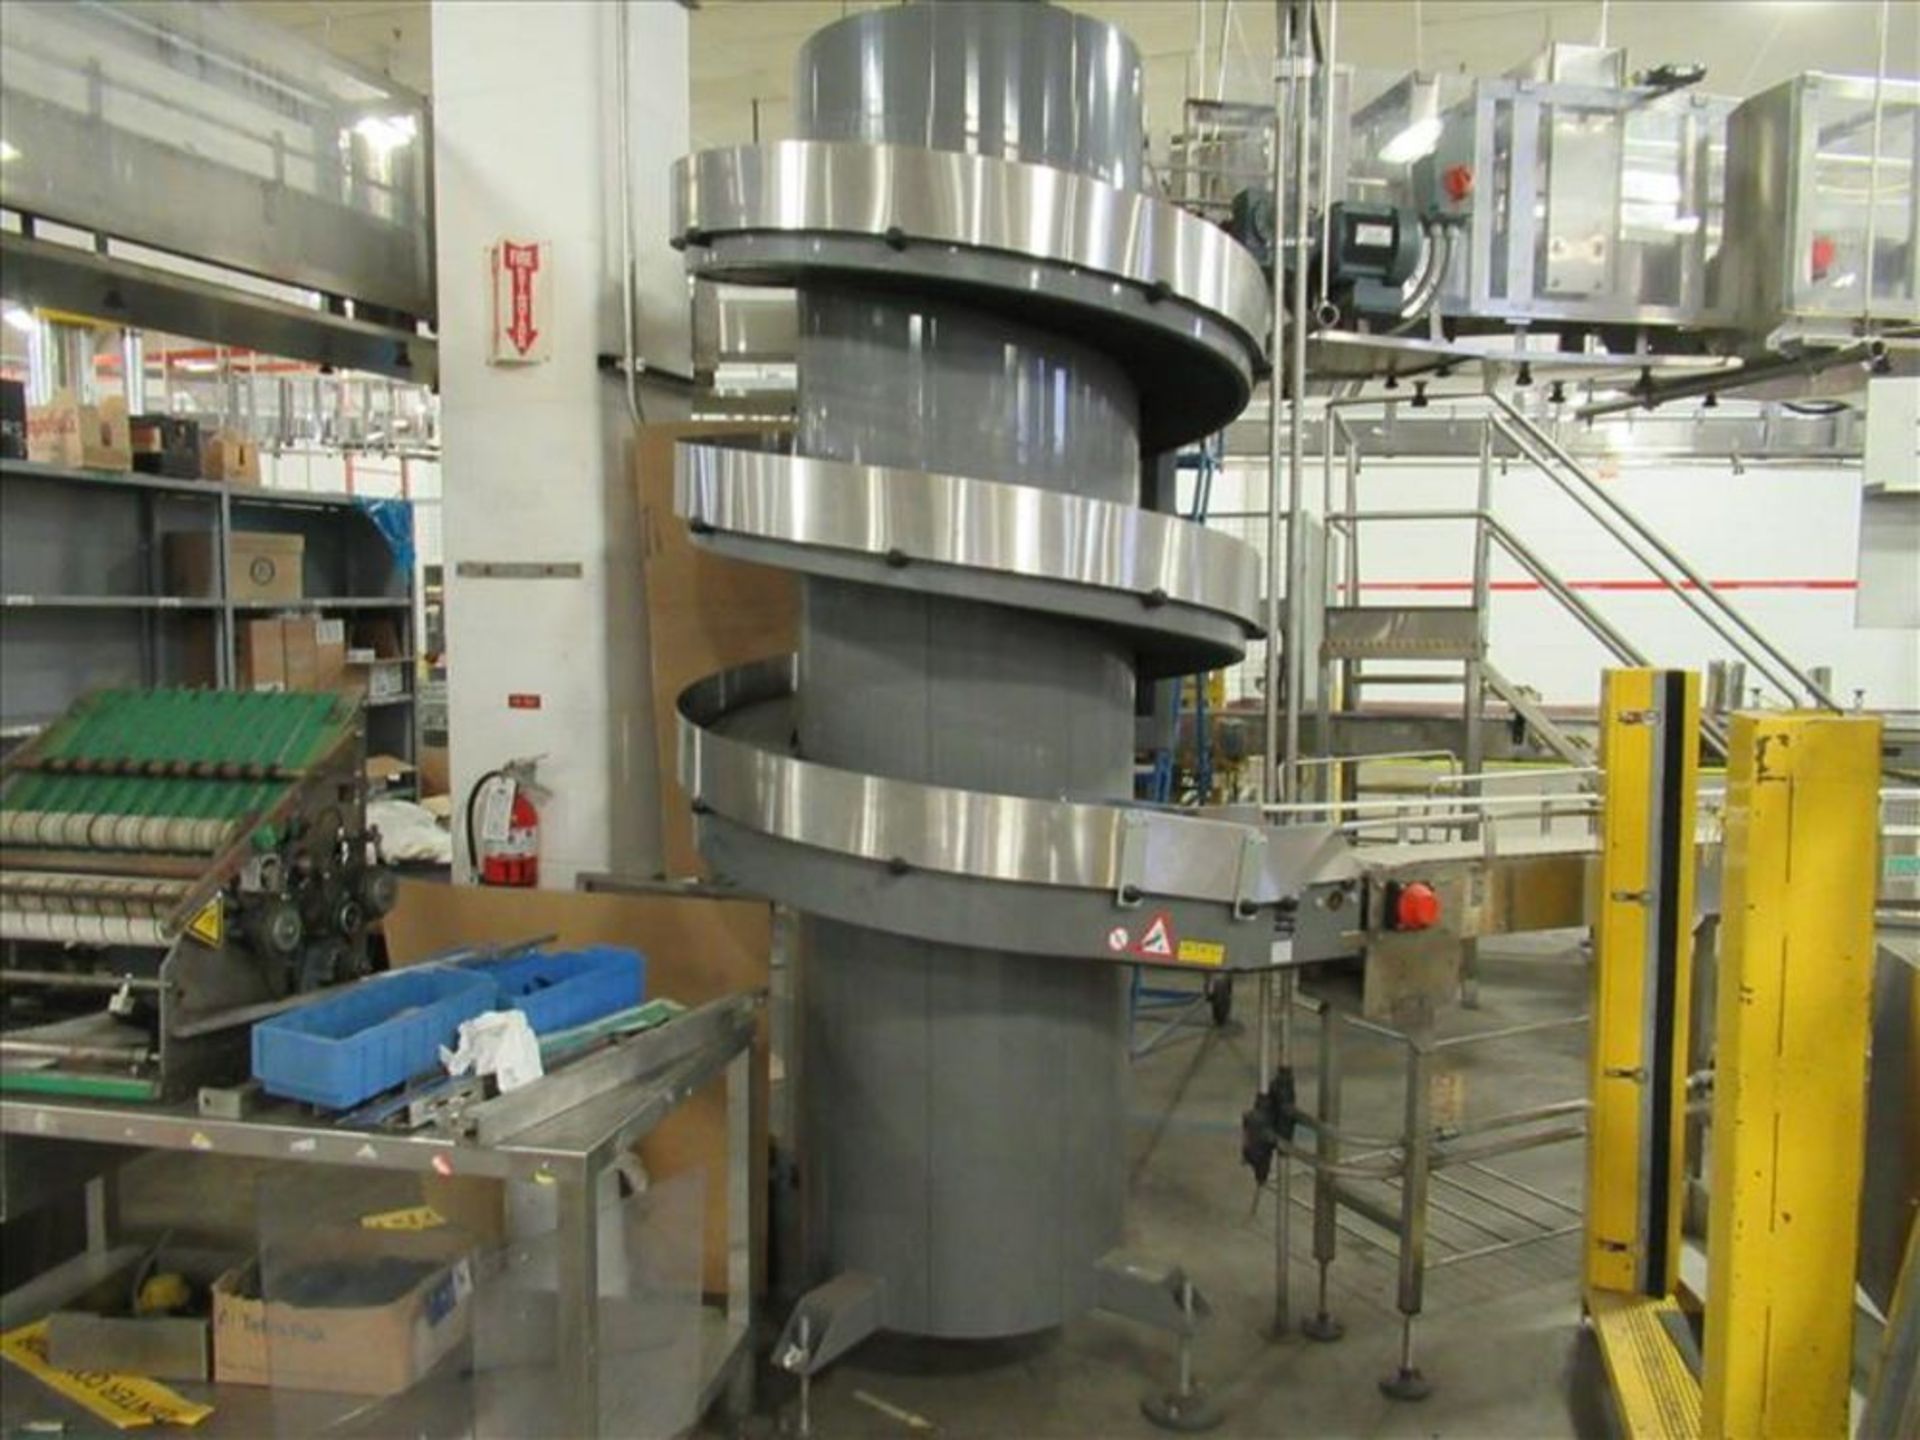 AmbaFlex spiral case elevator #2 model SV200-1000 /sn 7314-01, 3 tier continuous motion mild steel